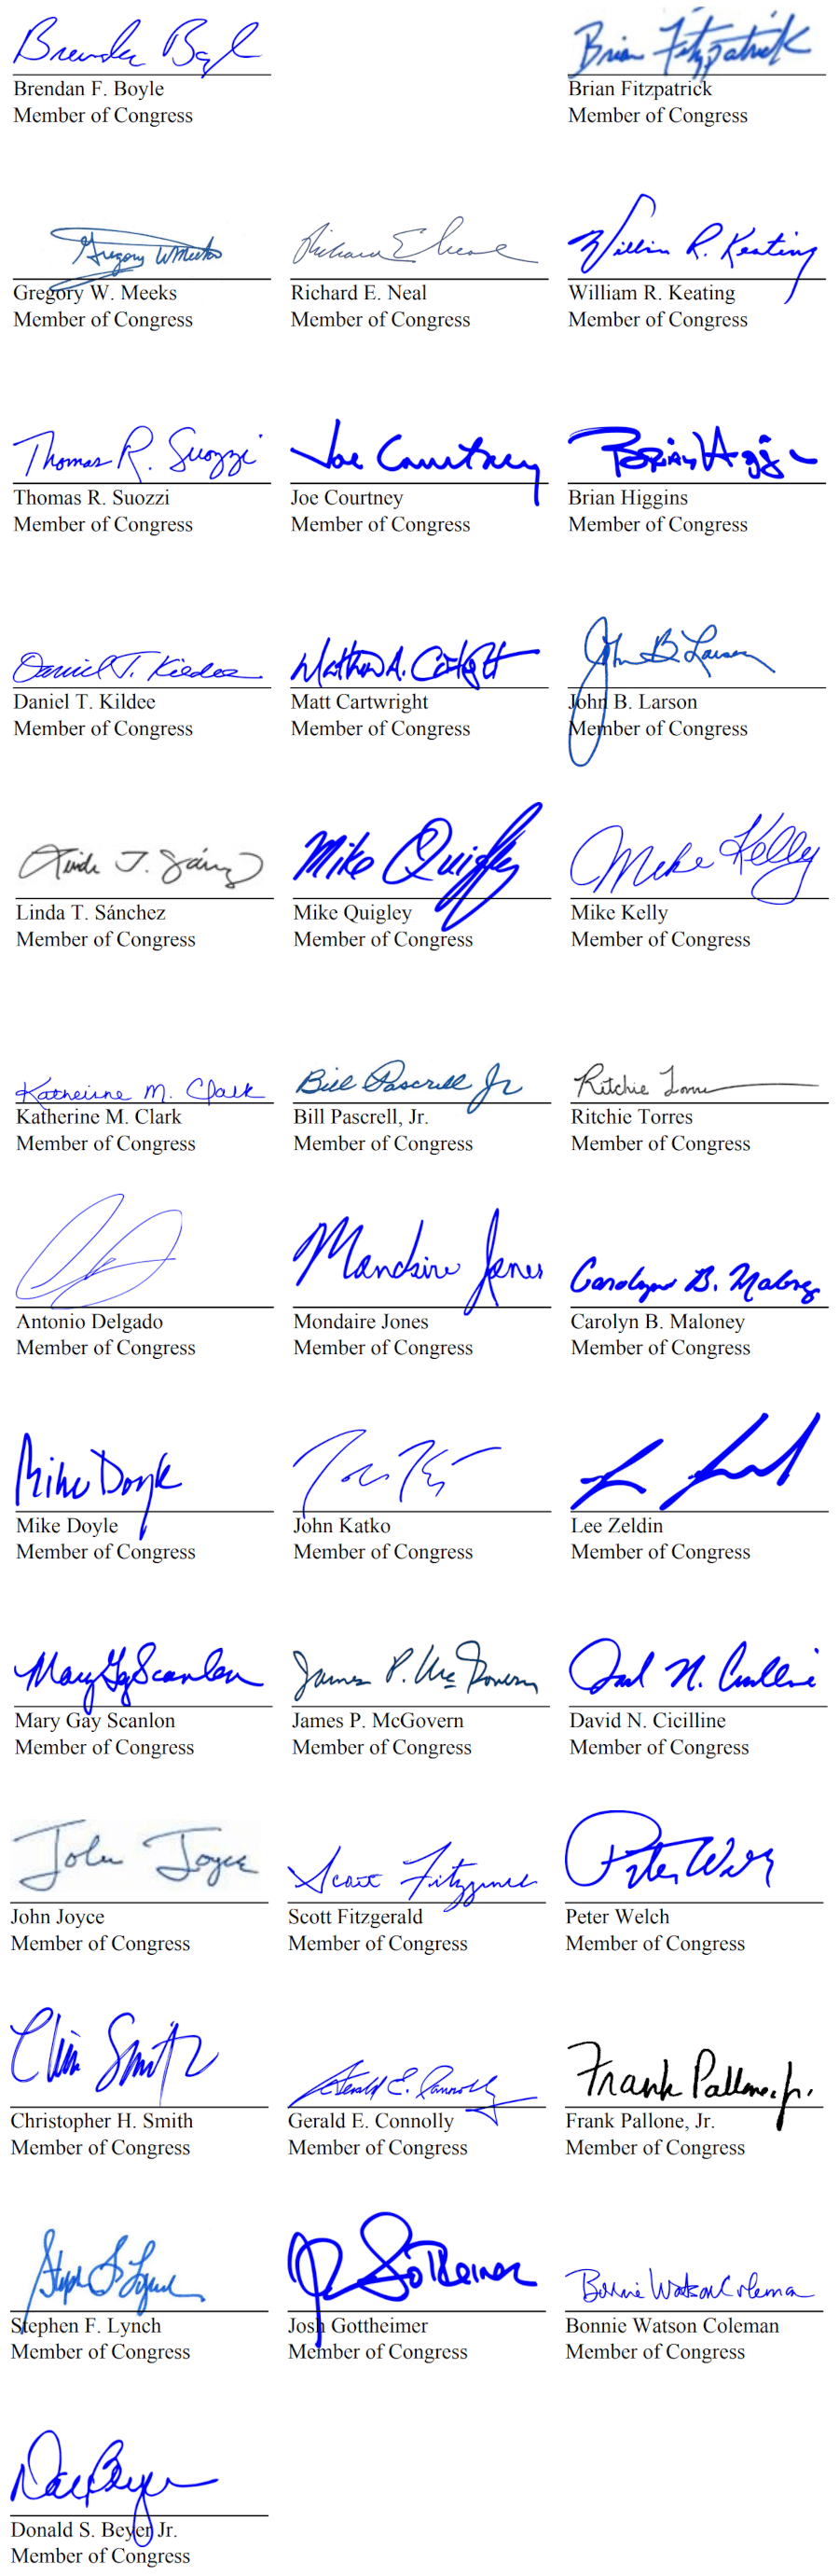 US Congress Members